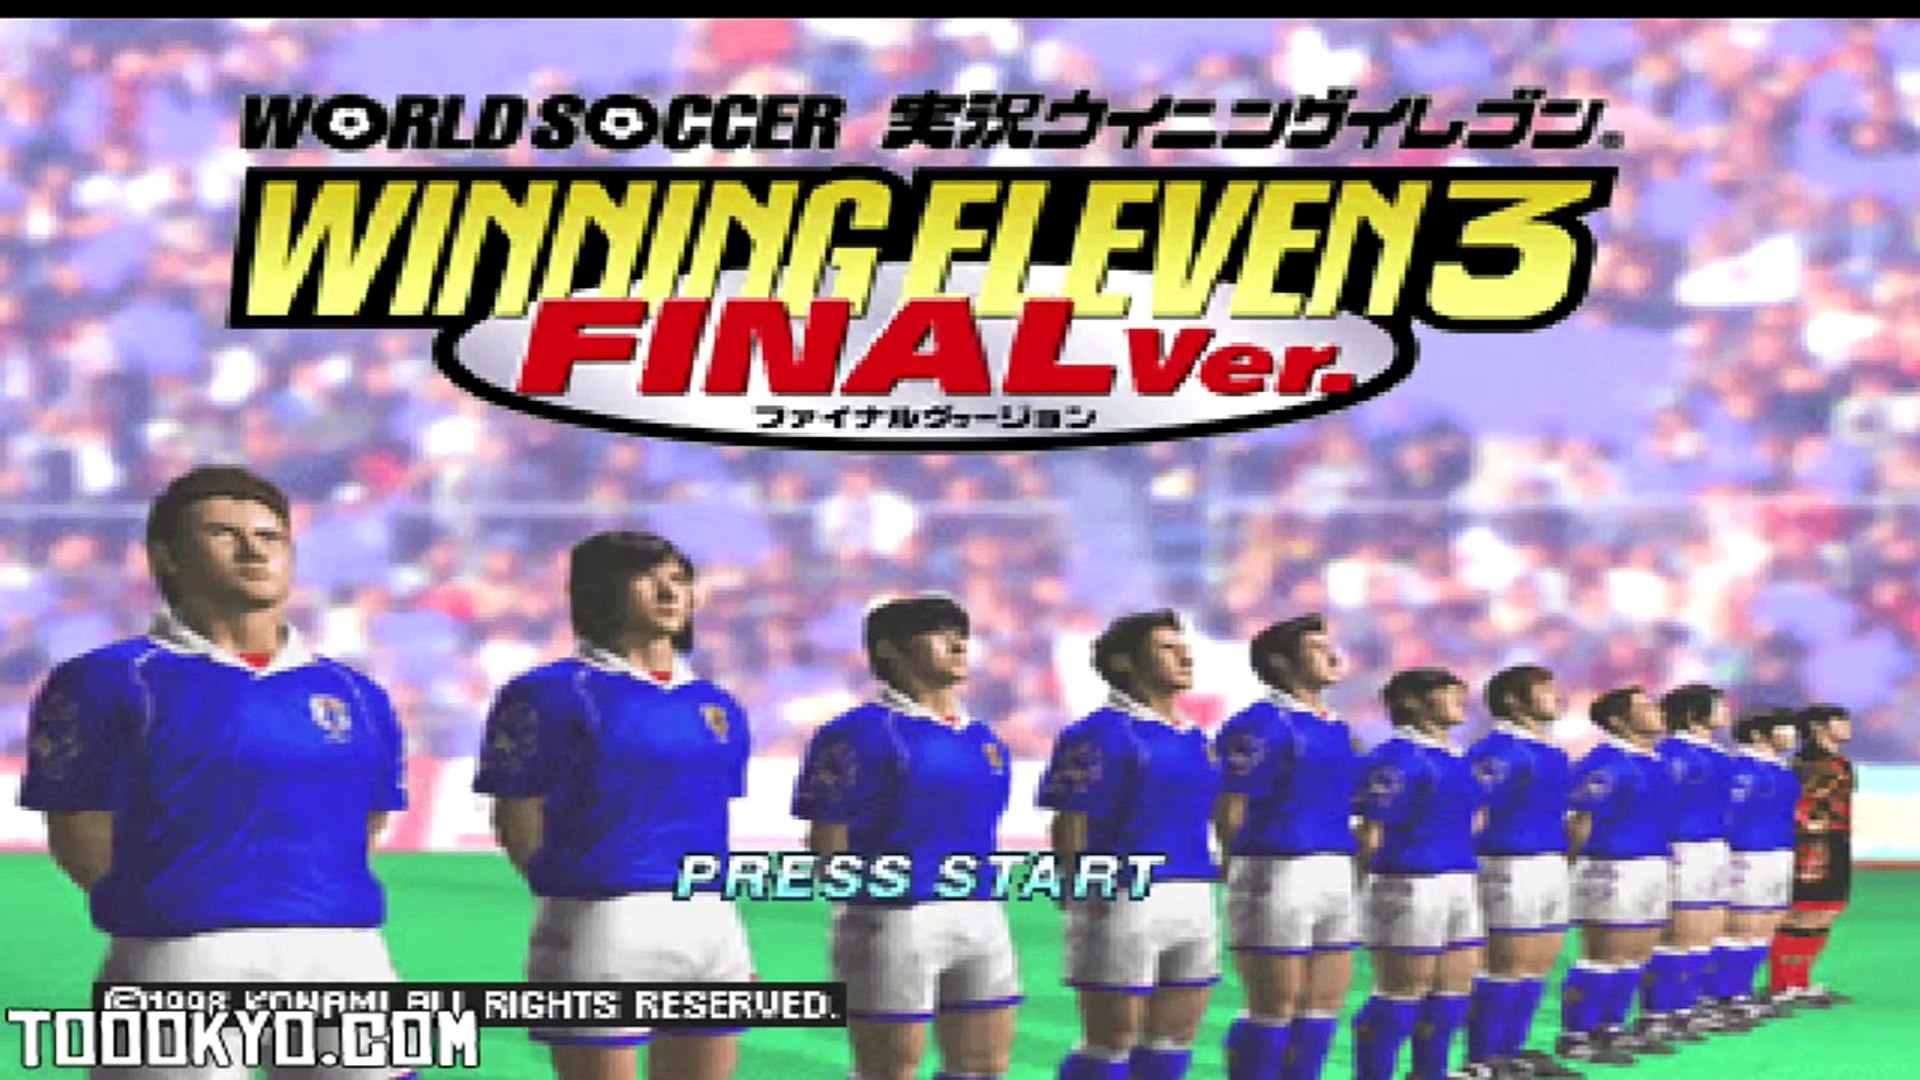 World Soccer Jikkyou Winning Eleven 3 - Final Ver. (Japan) (PS1) (1998) -  video Dailymotion